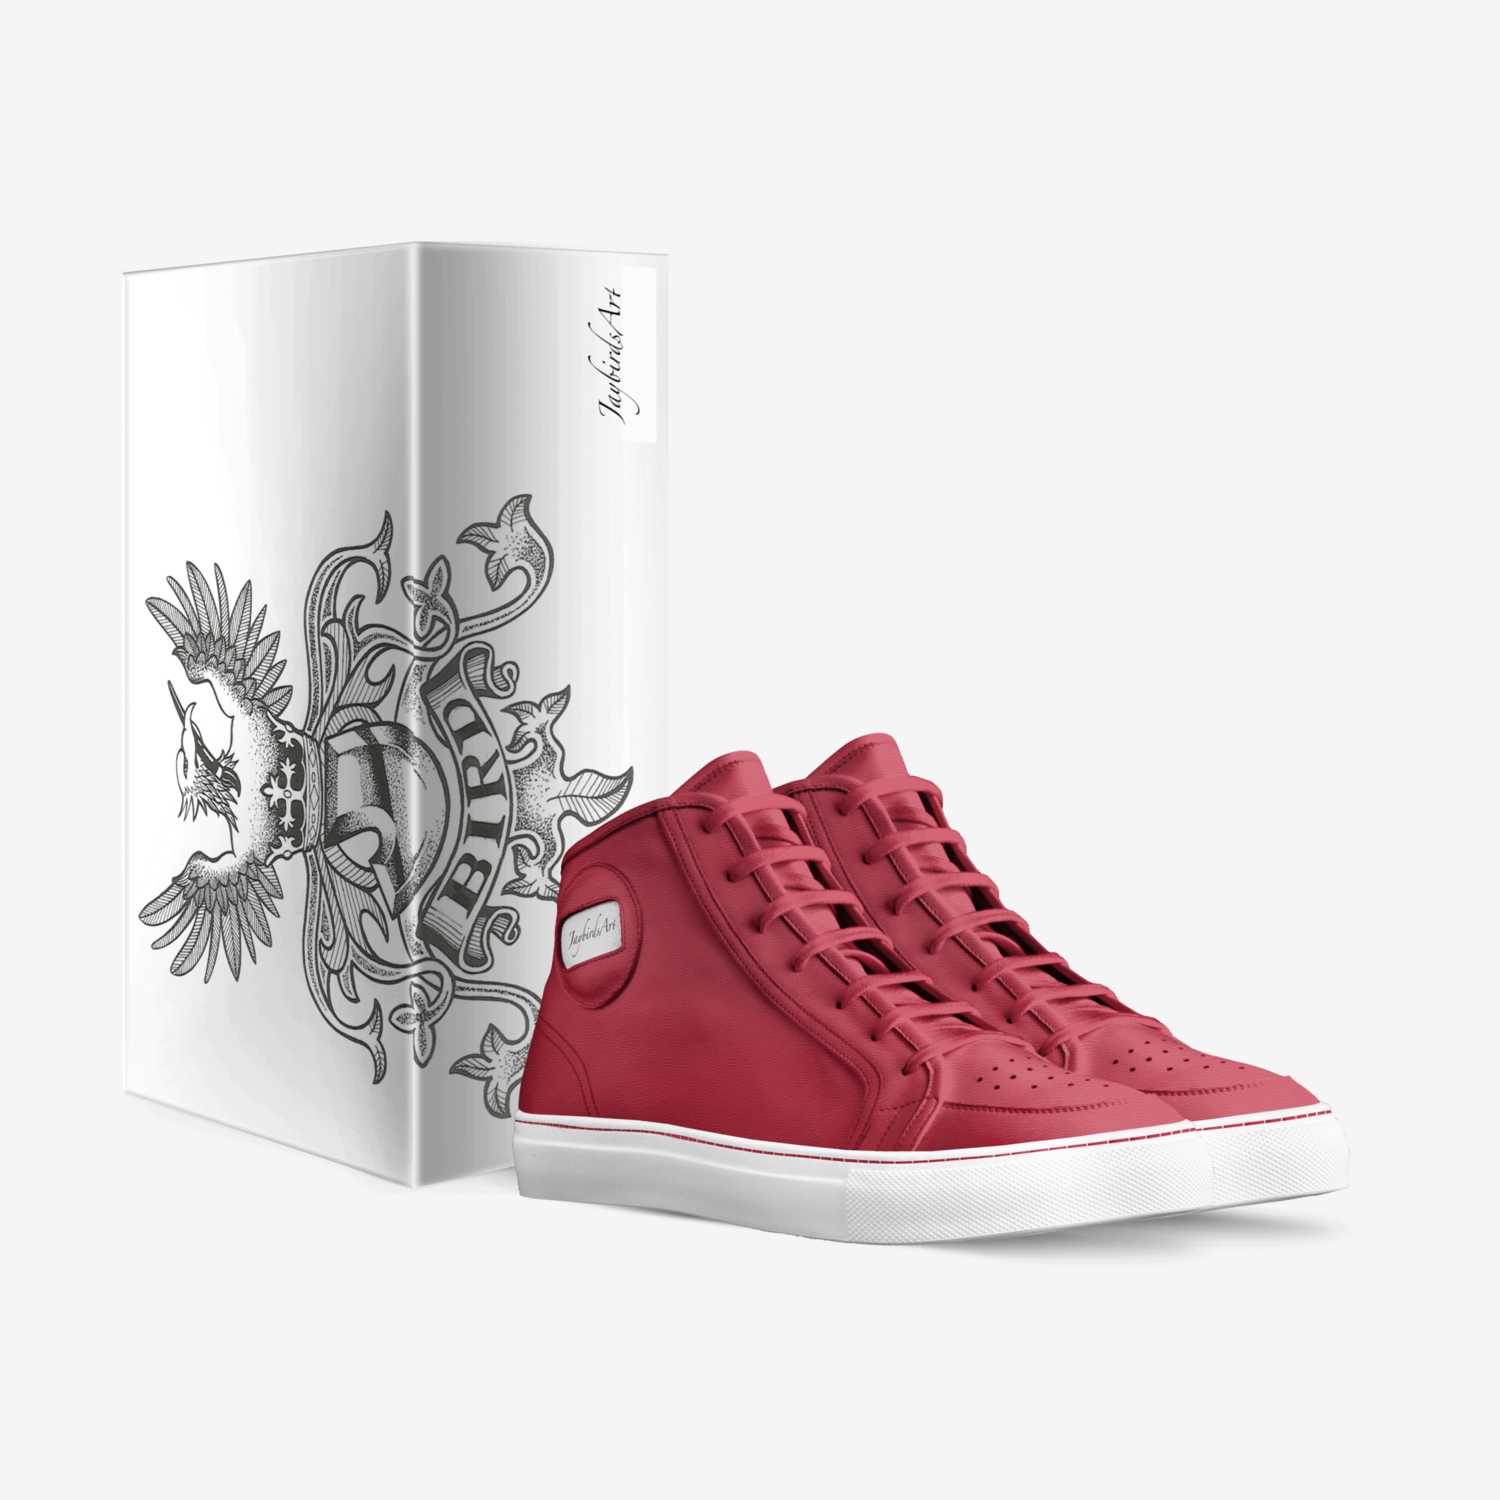 JaybirdsArt custom made in Italy shoes by Jaleel Davis | Box view